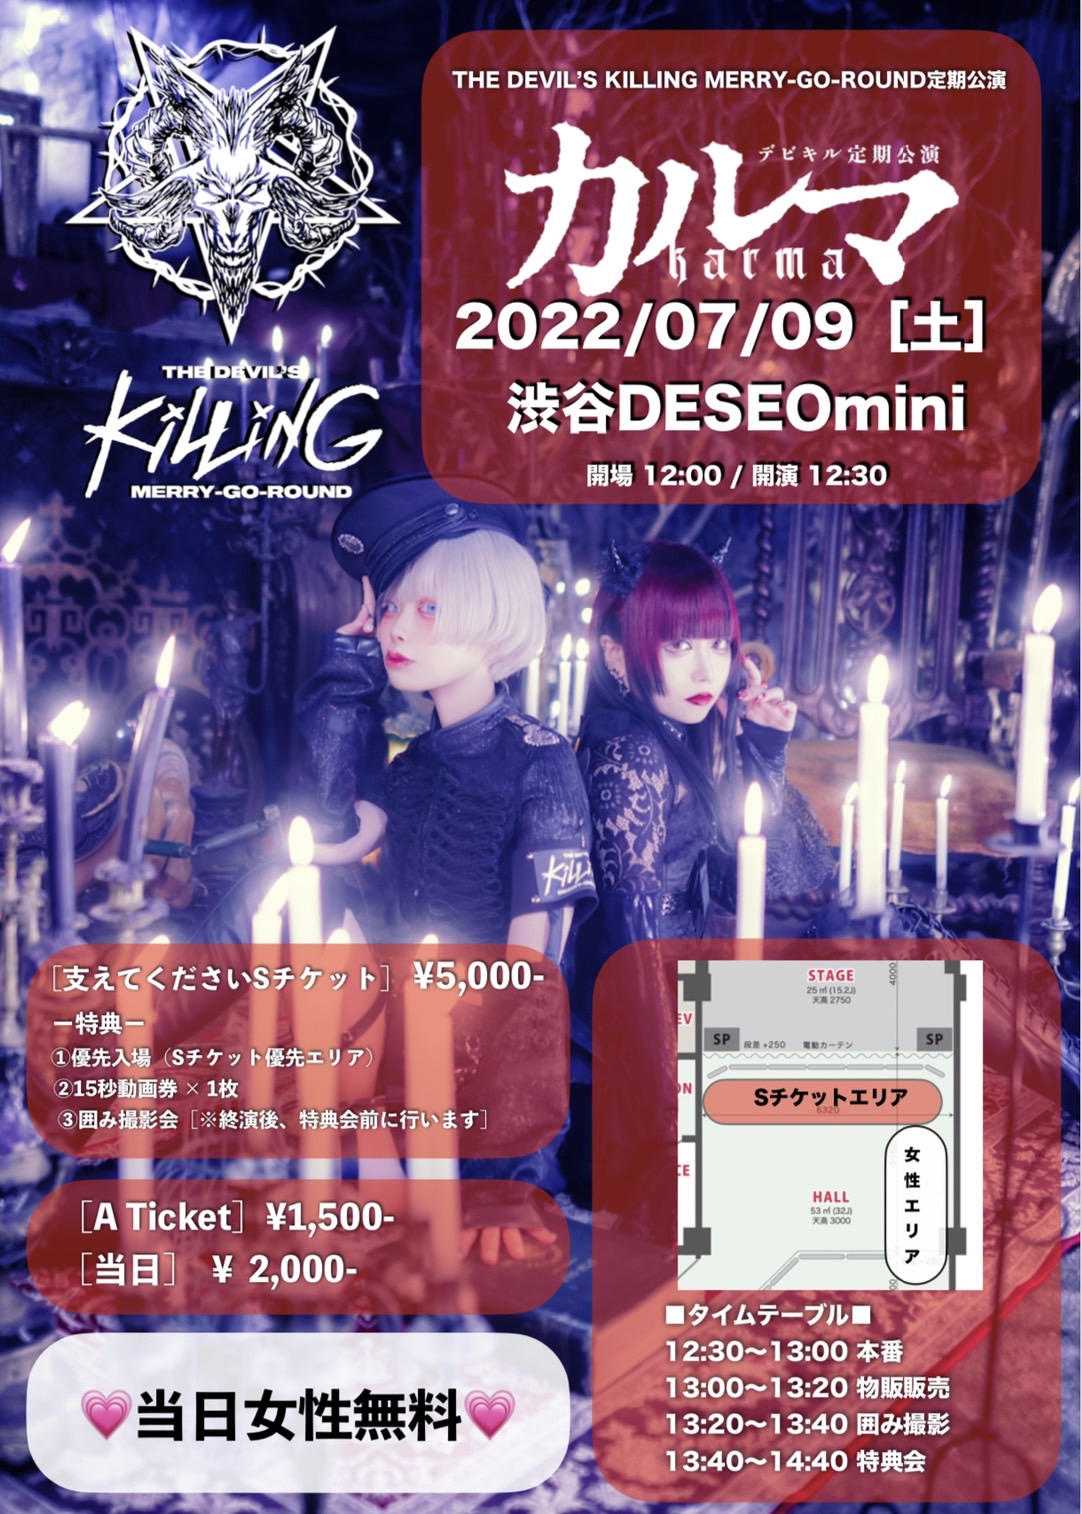 THE DEVIL’S KILLING MERRY-GO-ROUND定期公演 『カルマ- karma-』